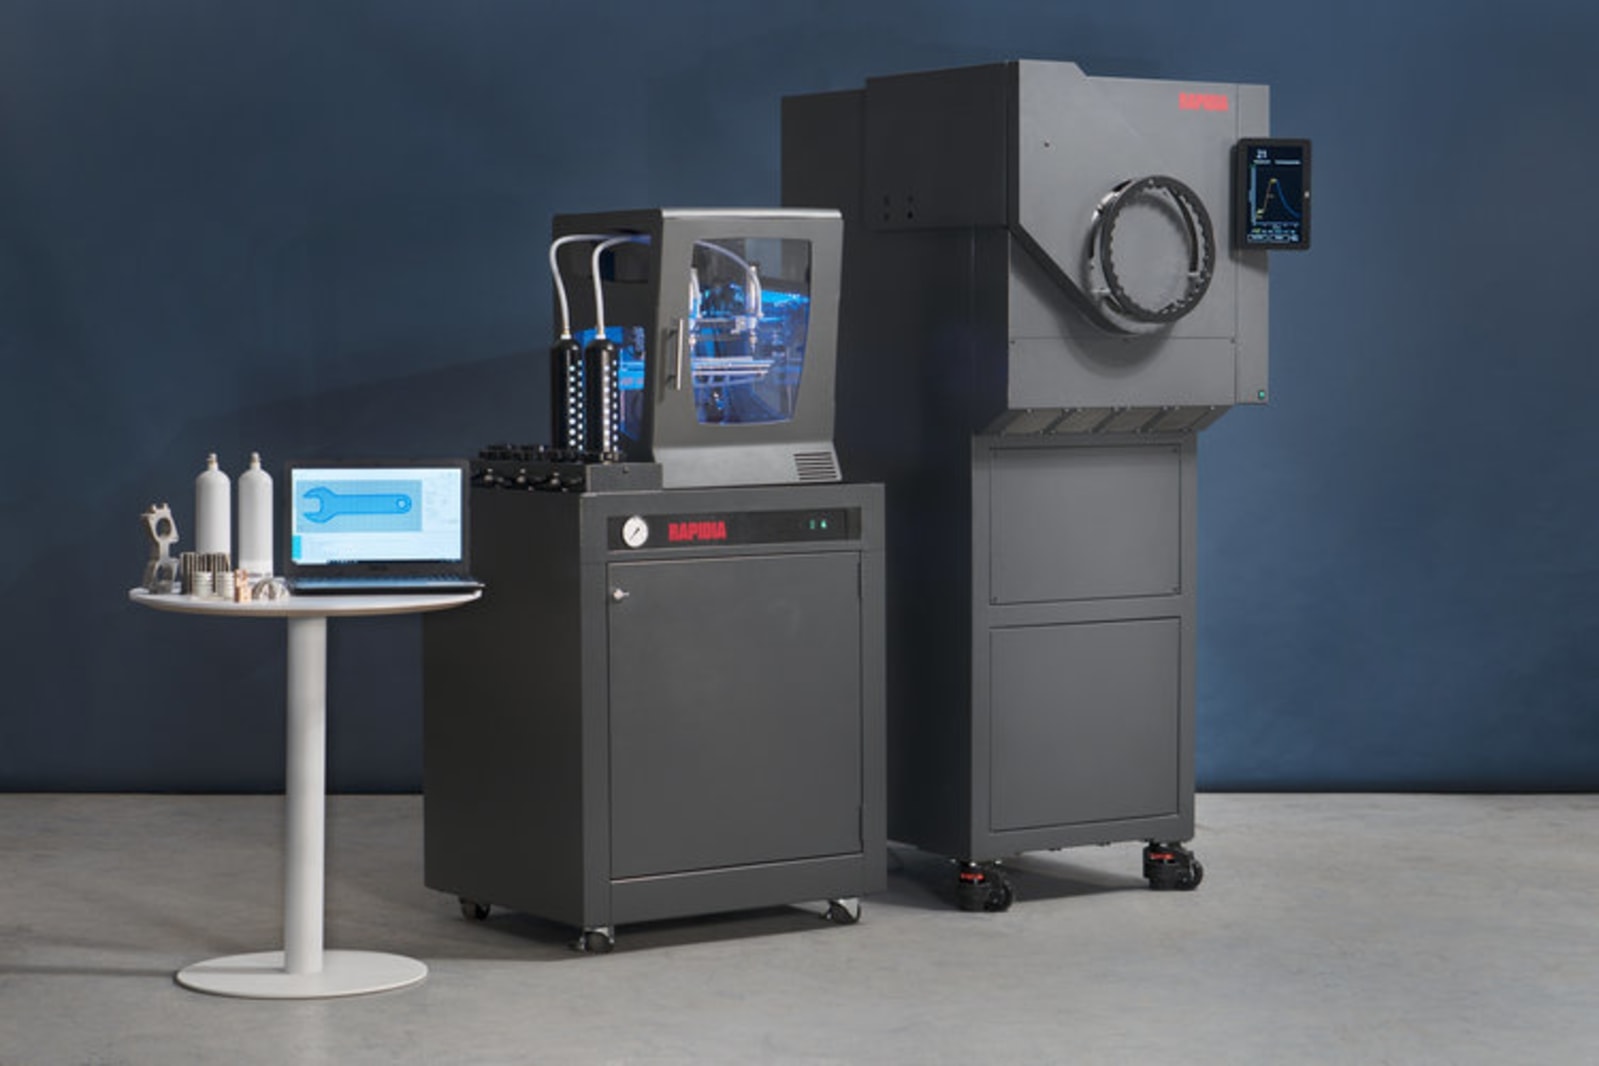 3d printing technology